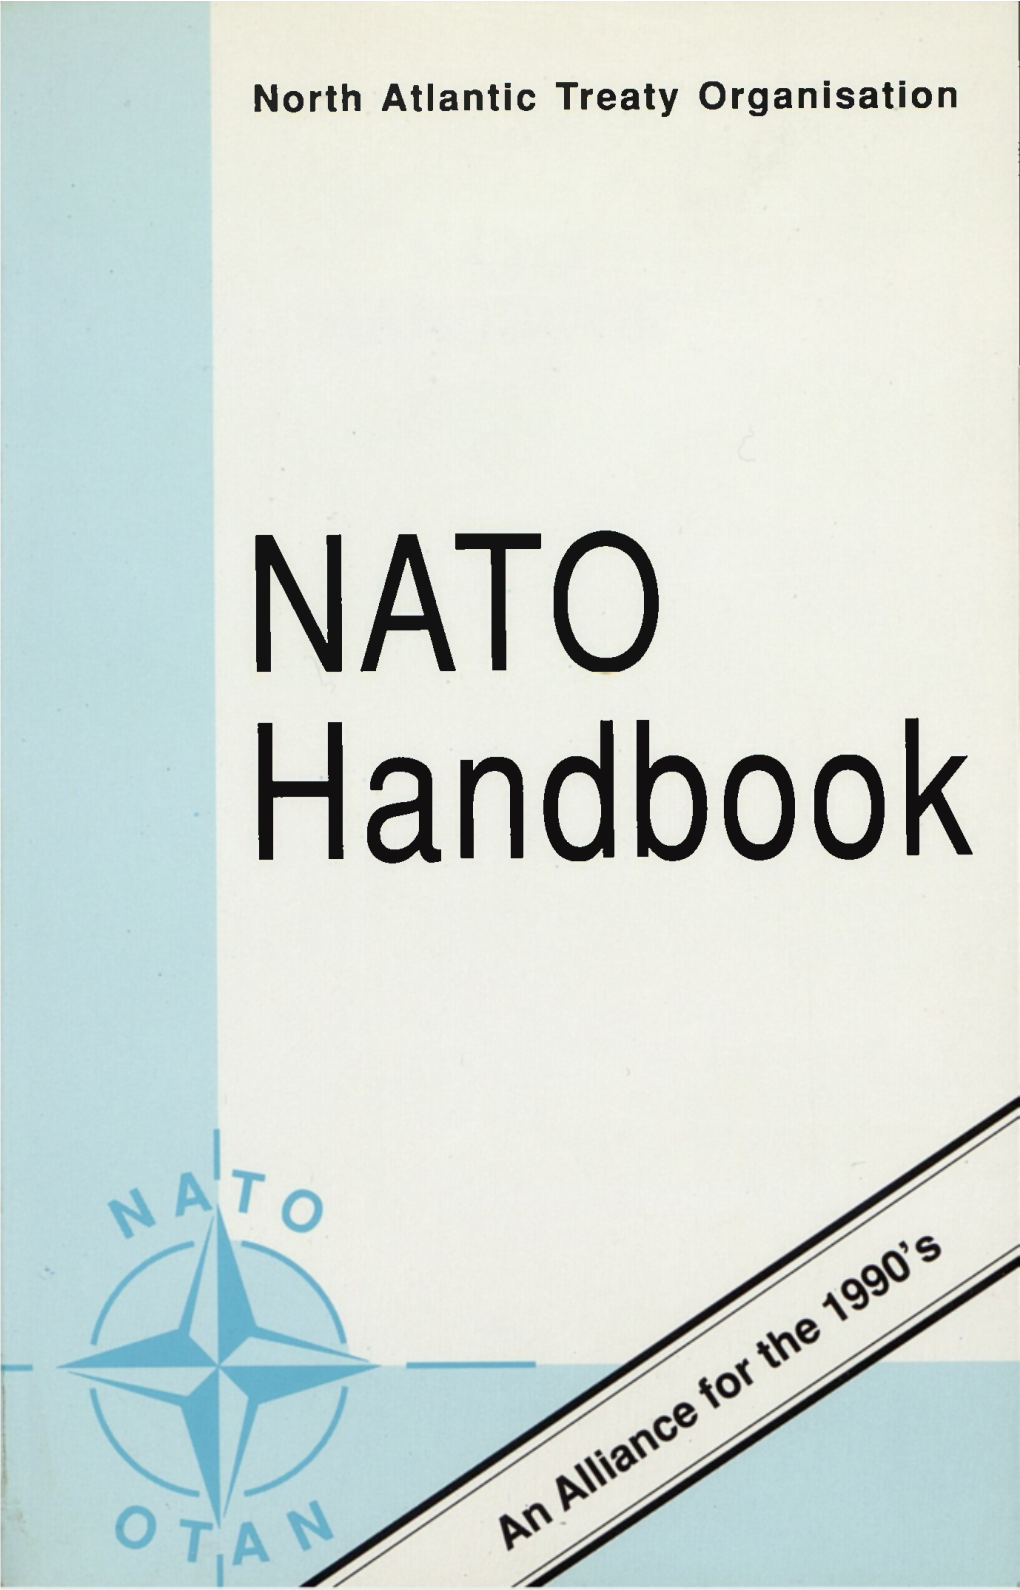 NATO Handbook 1989